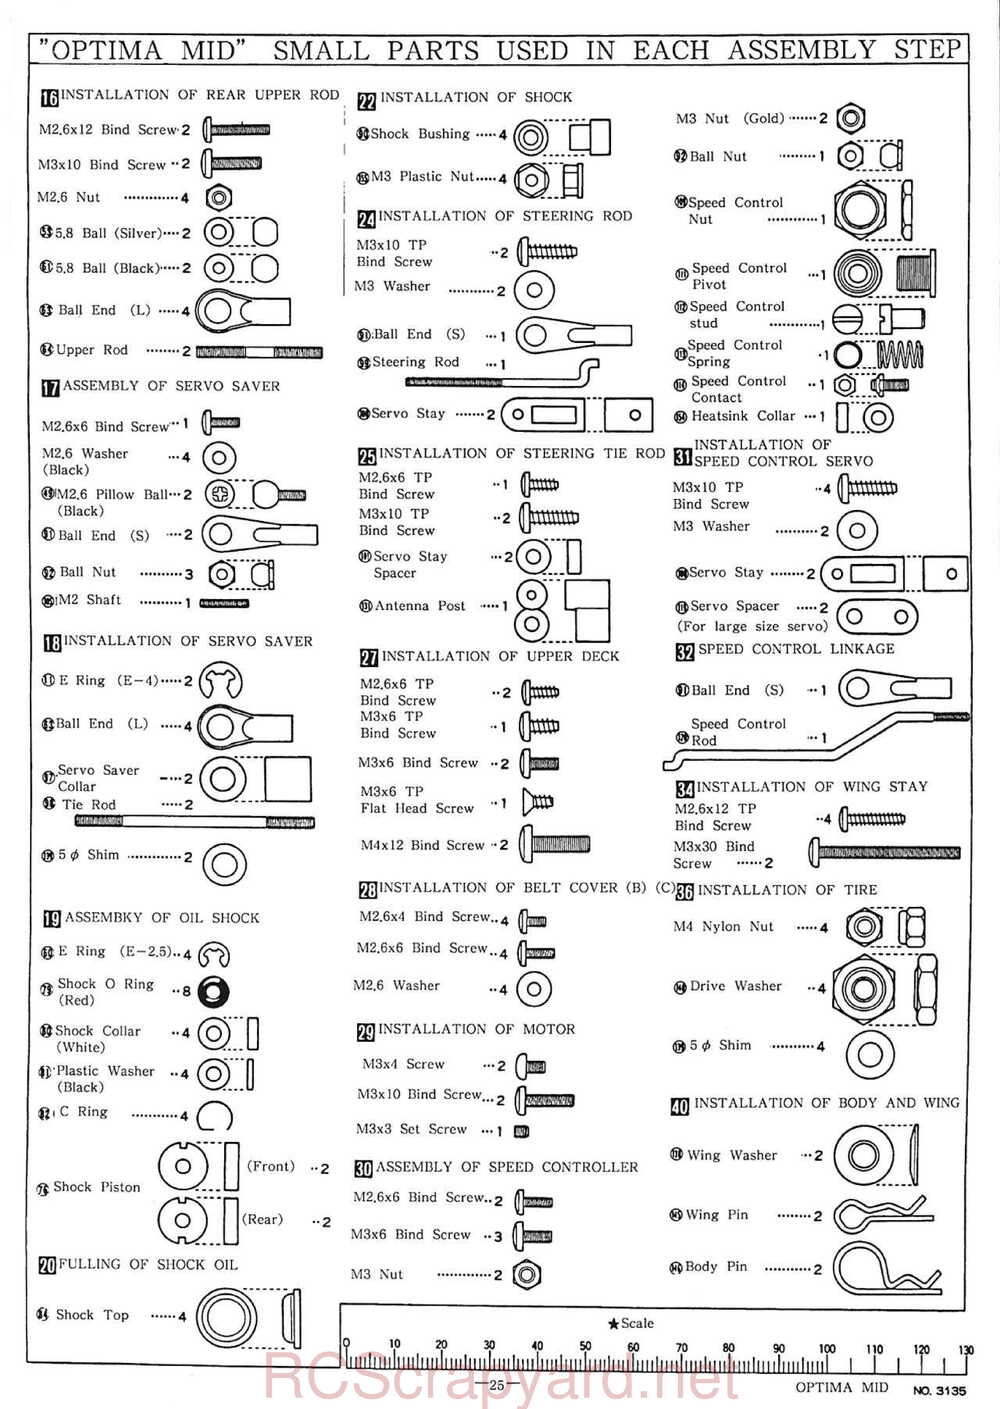 Kyosho - 3135 - Optima-Mid - Manual - Page 25